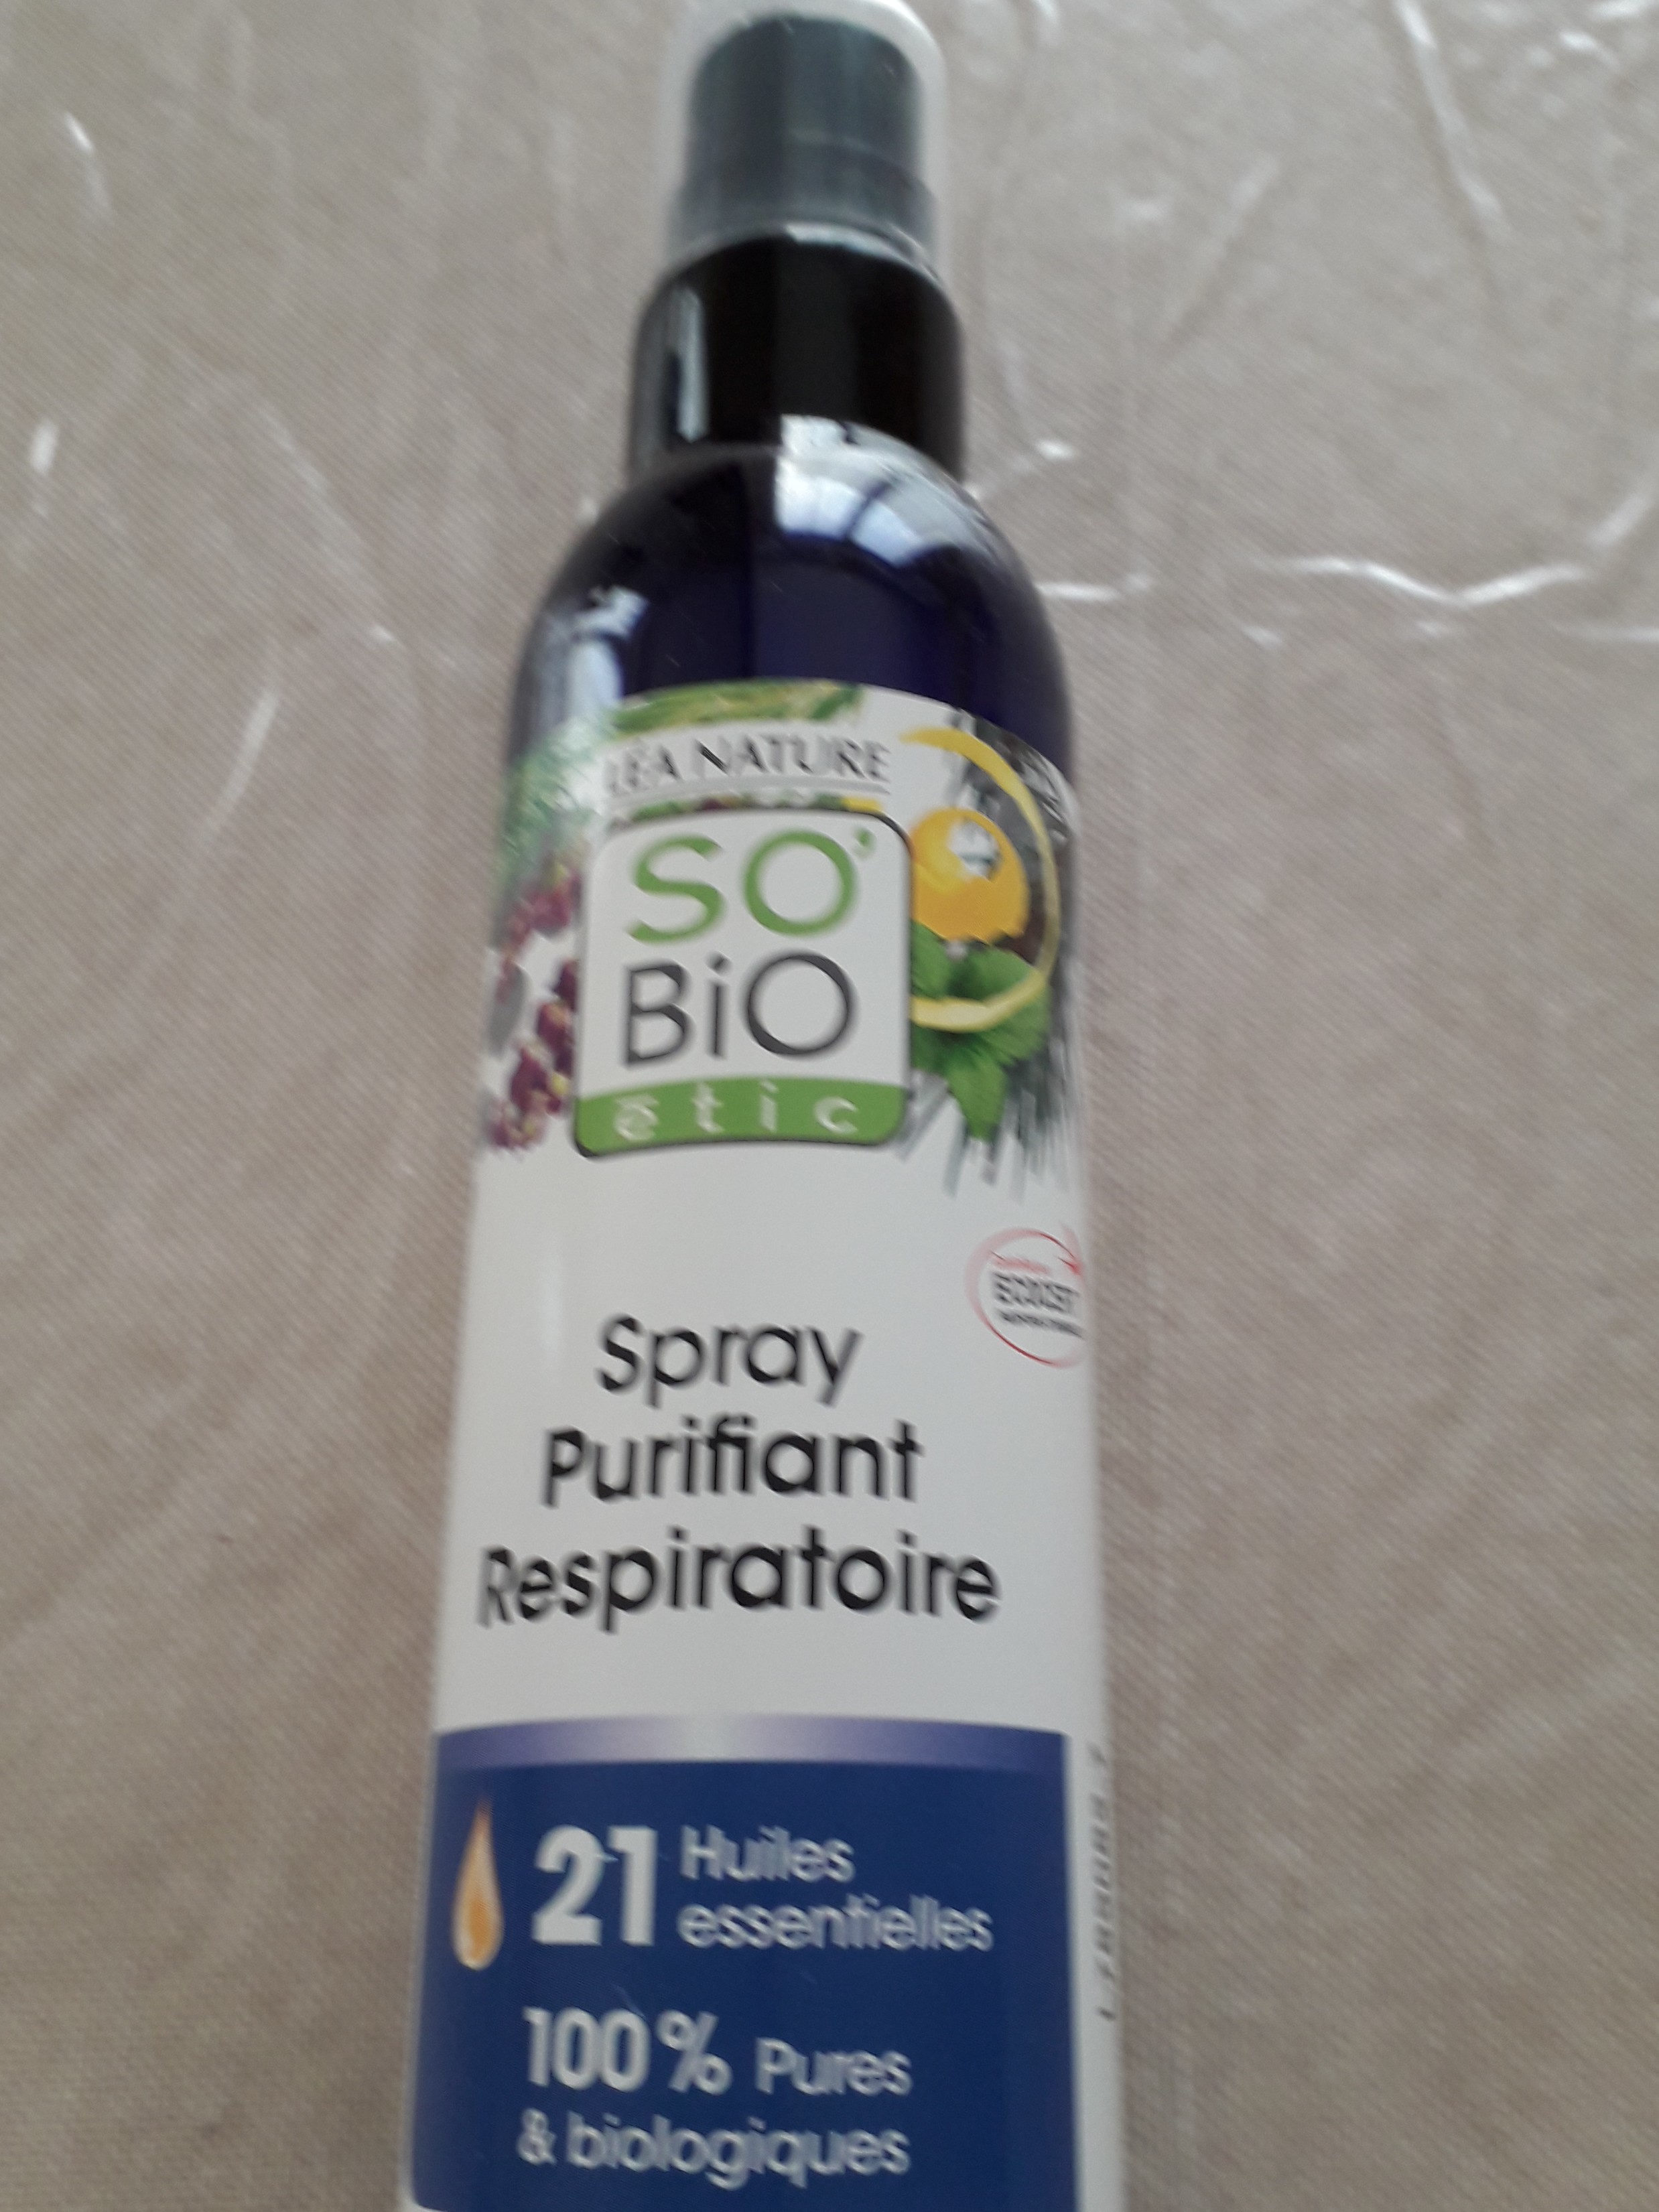 Spray Purifiant Respiratoire - Product - fr